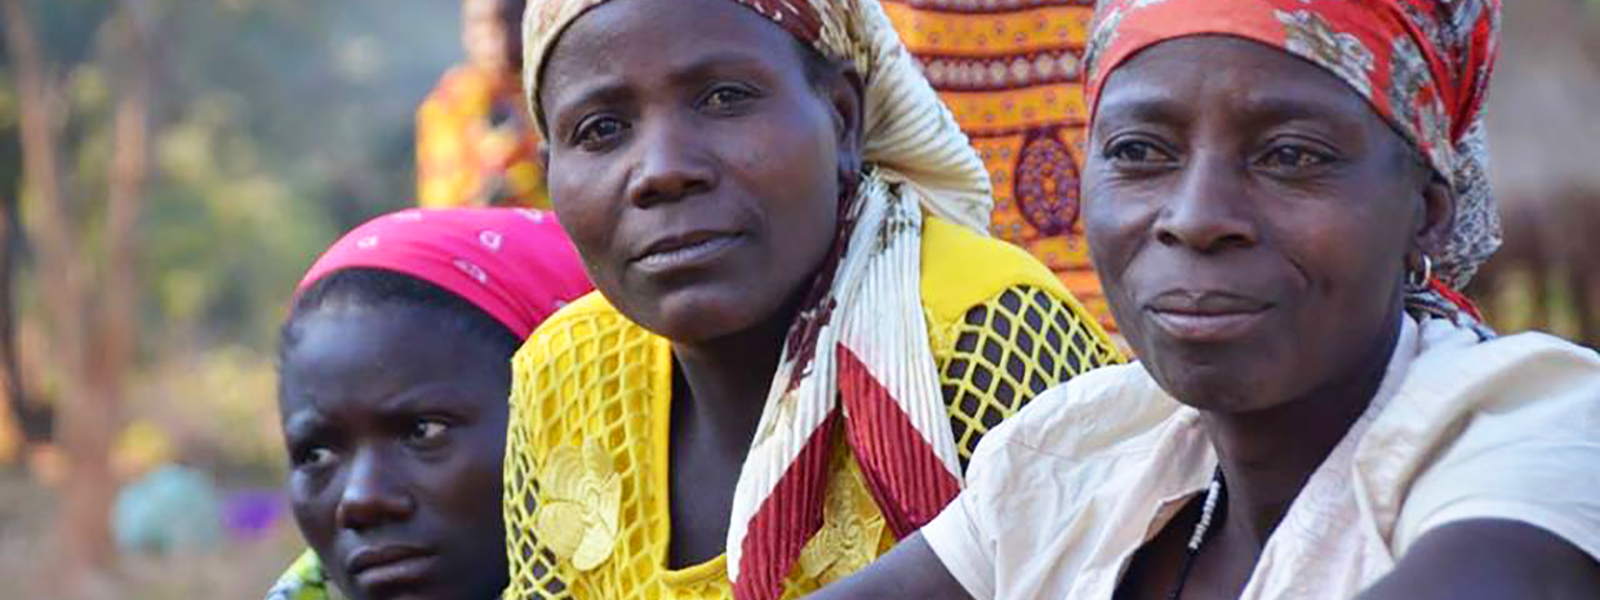 Three African women listening to information on fistula prevention